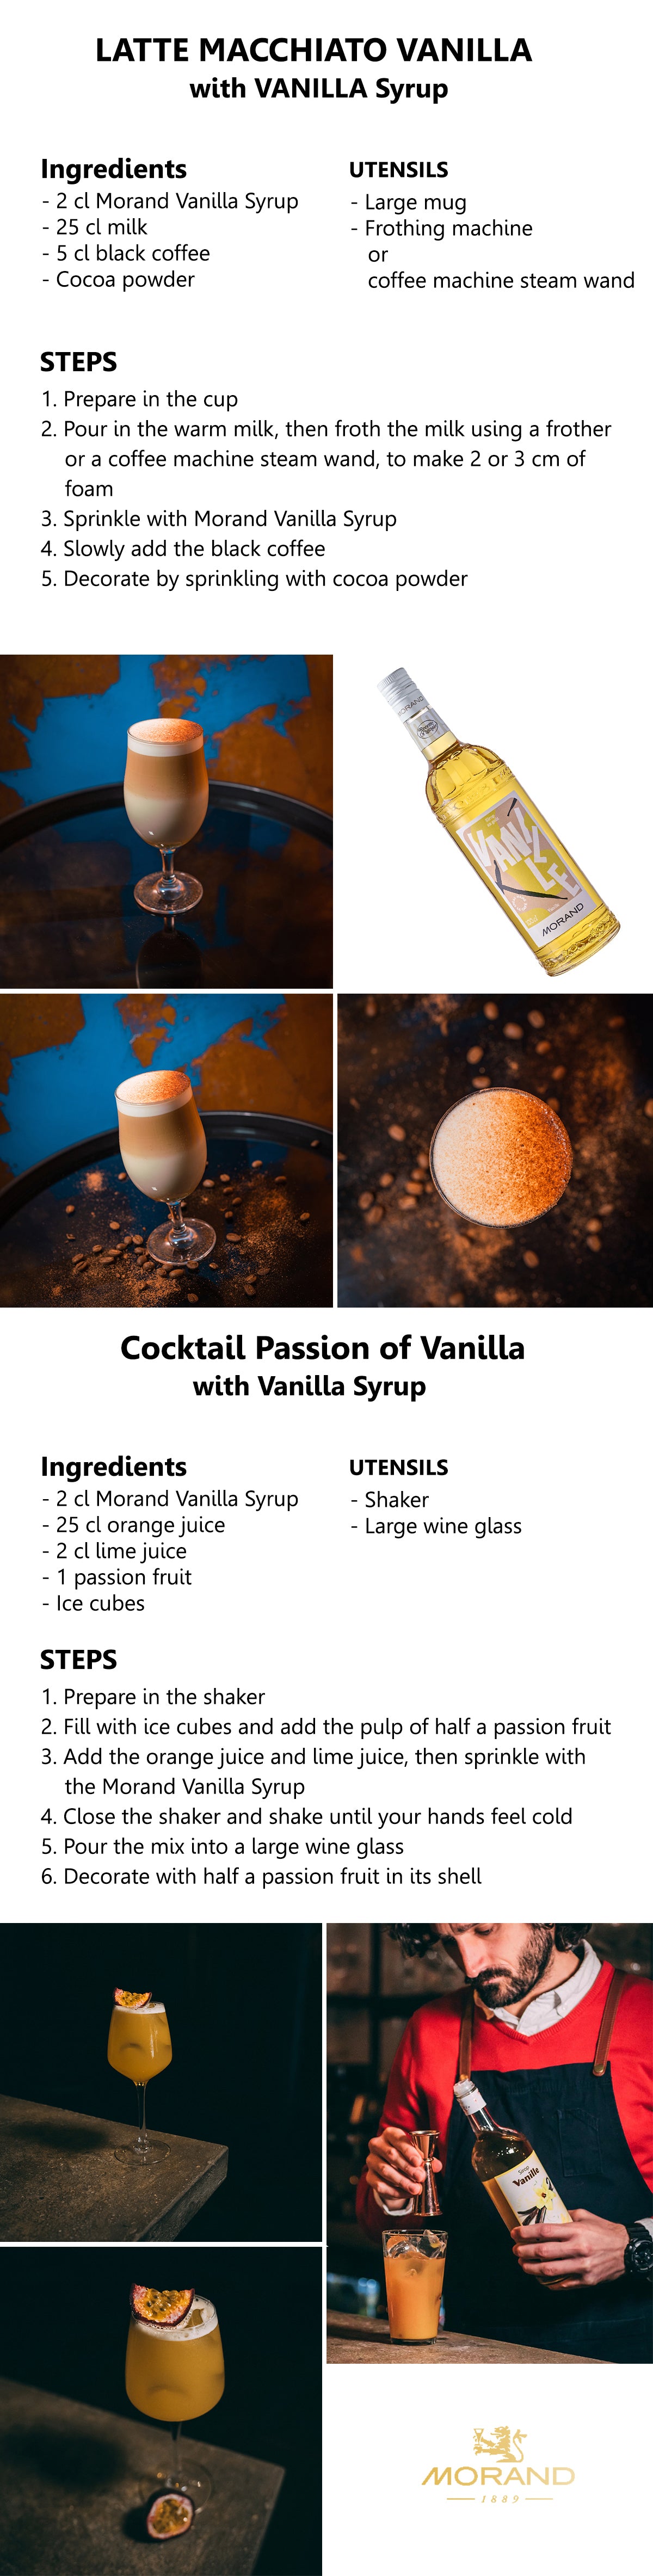 MORAND3007 Cocktail, vanilla syrup | Switzerluxe